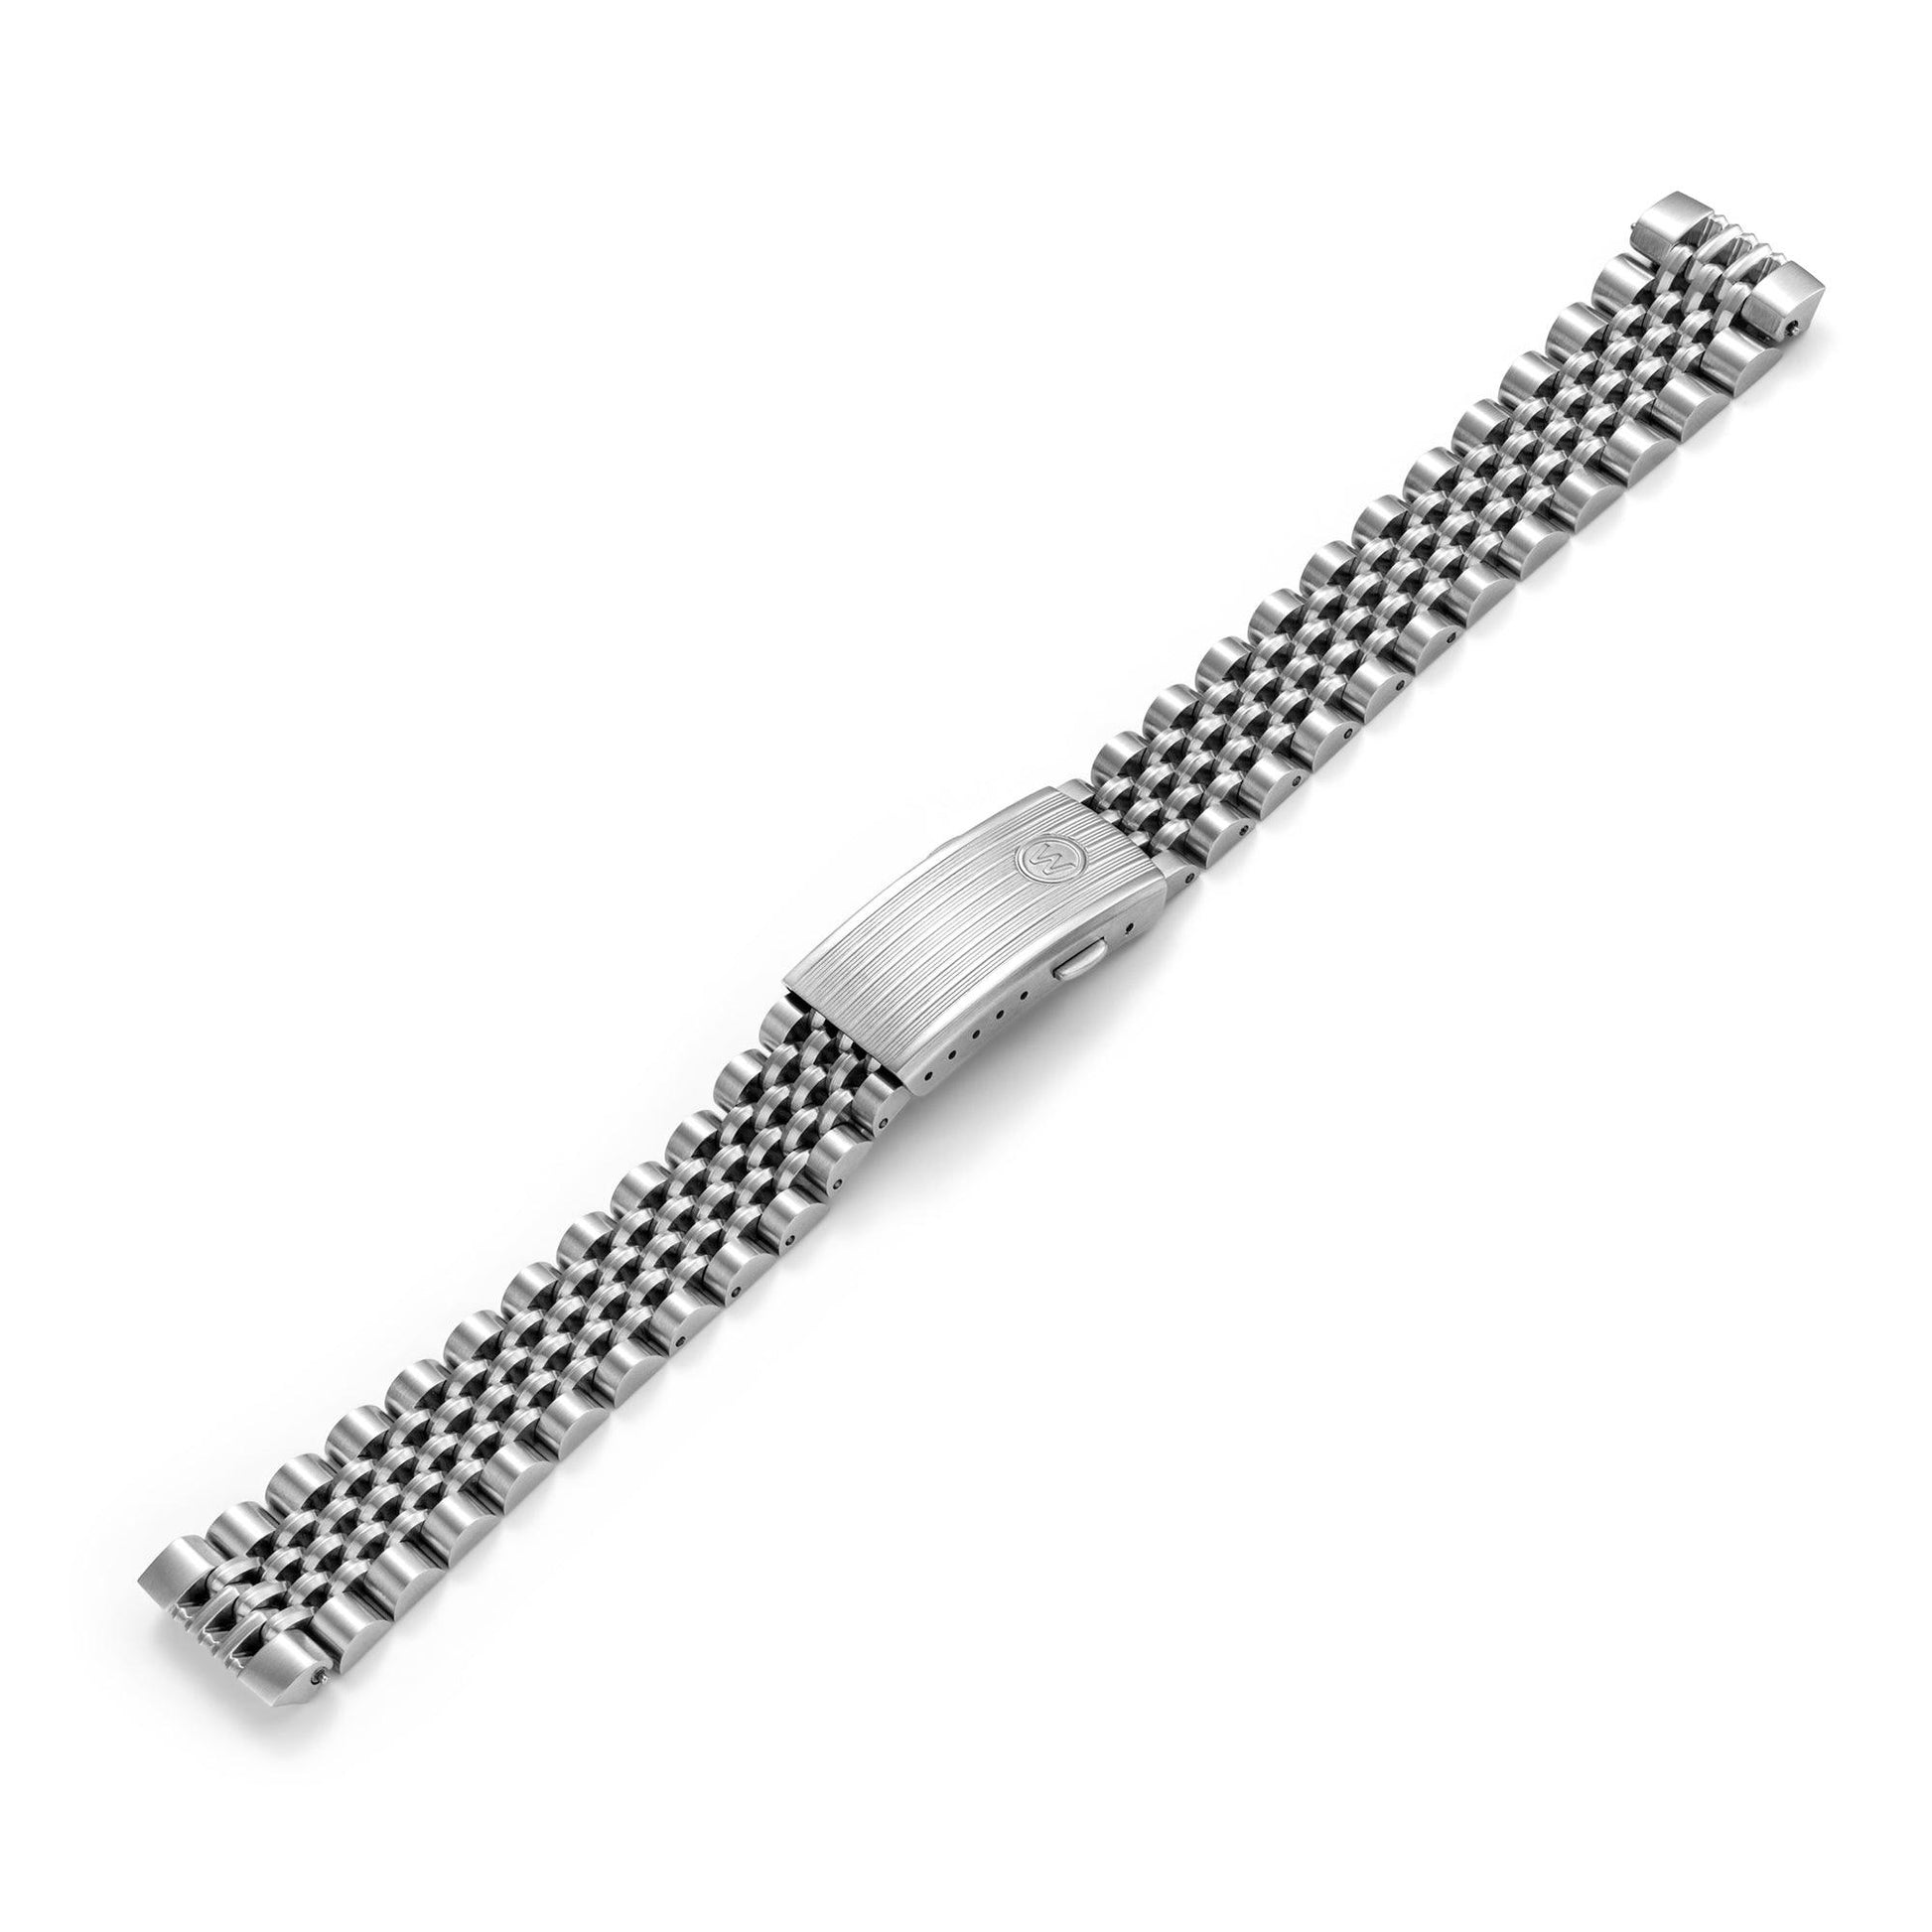 Skindiver WT Mecaquartz Bracelet Watch - Black & Steel - Wolbrook Watches